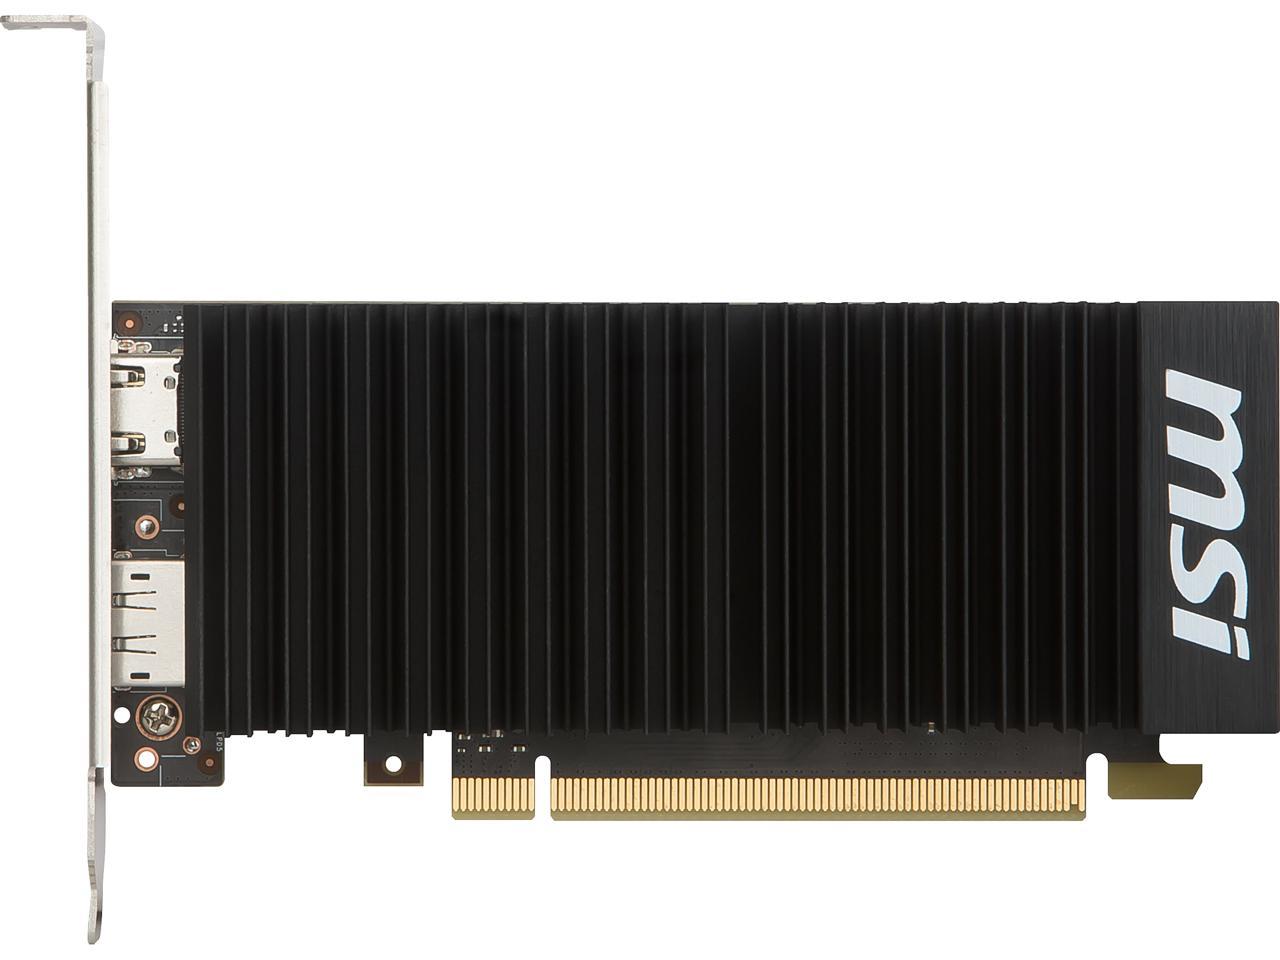 MSI GeForce GT 1030 DirectX 12 GT 1030 2GH LP OC 2GB 64-Bit GDDR5 PCI Express 3.0 x16 (uses x4) HDCP Ready Low Profile Video Card